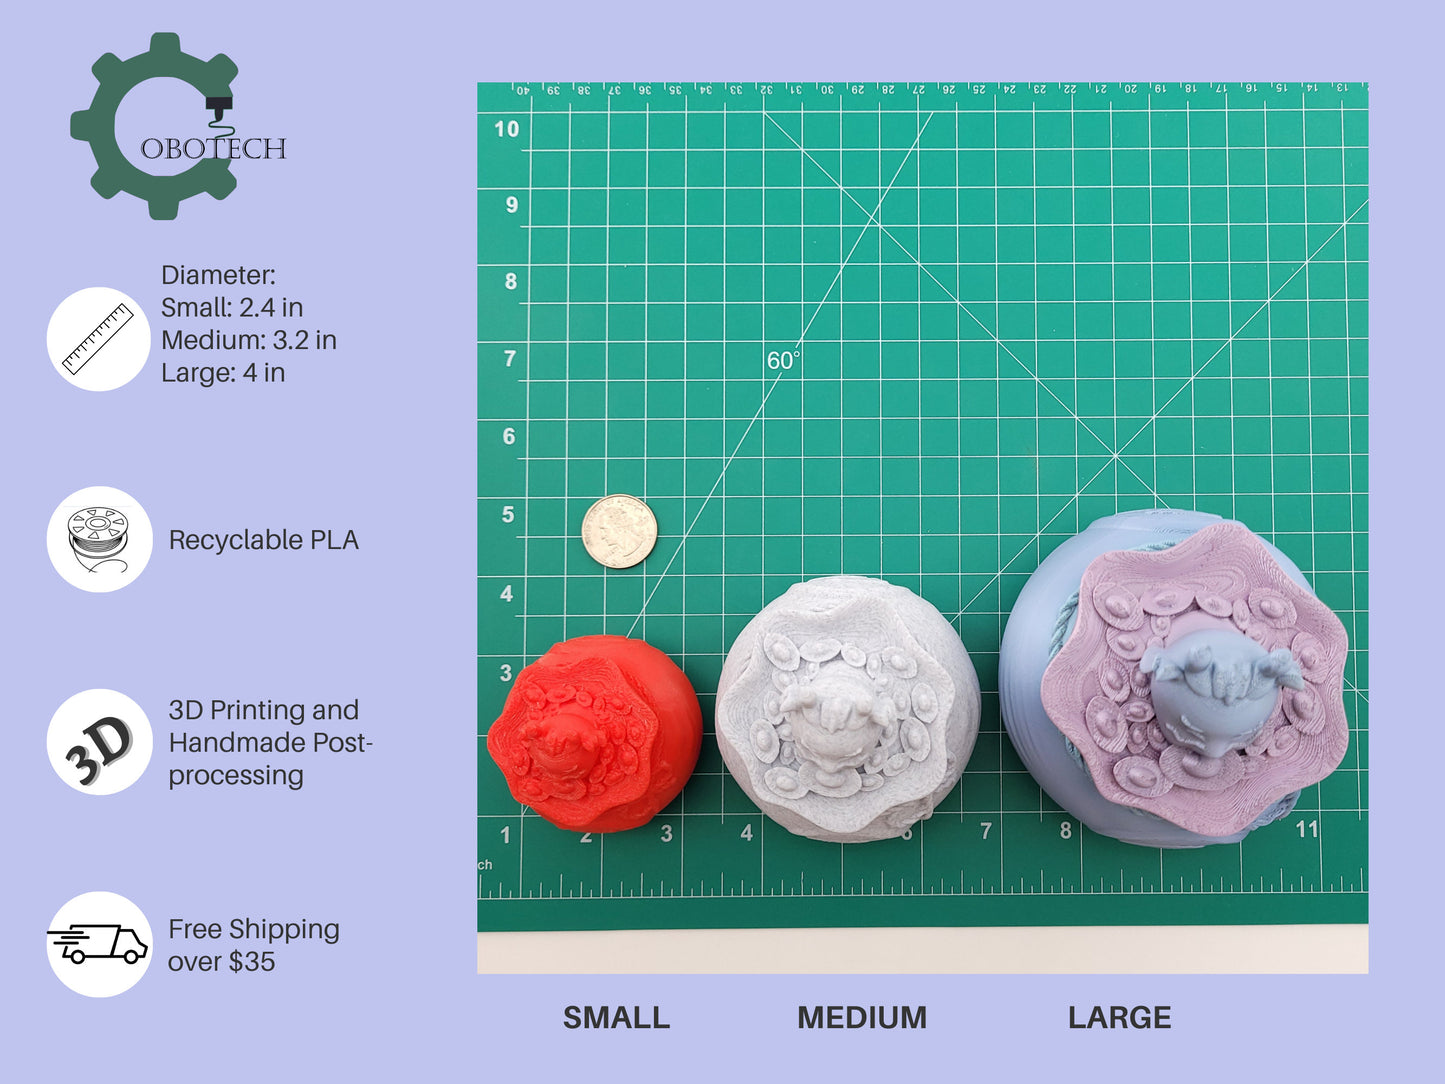 3D Print Lucky Dragon Money Jar by Cobotech, Articulated Dragon, Desk/Home Decor, Cool Gift